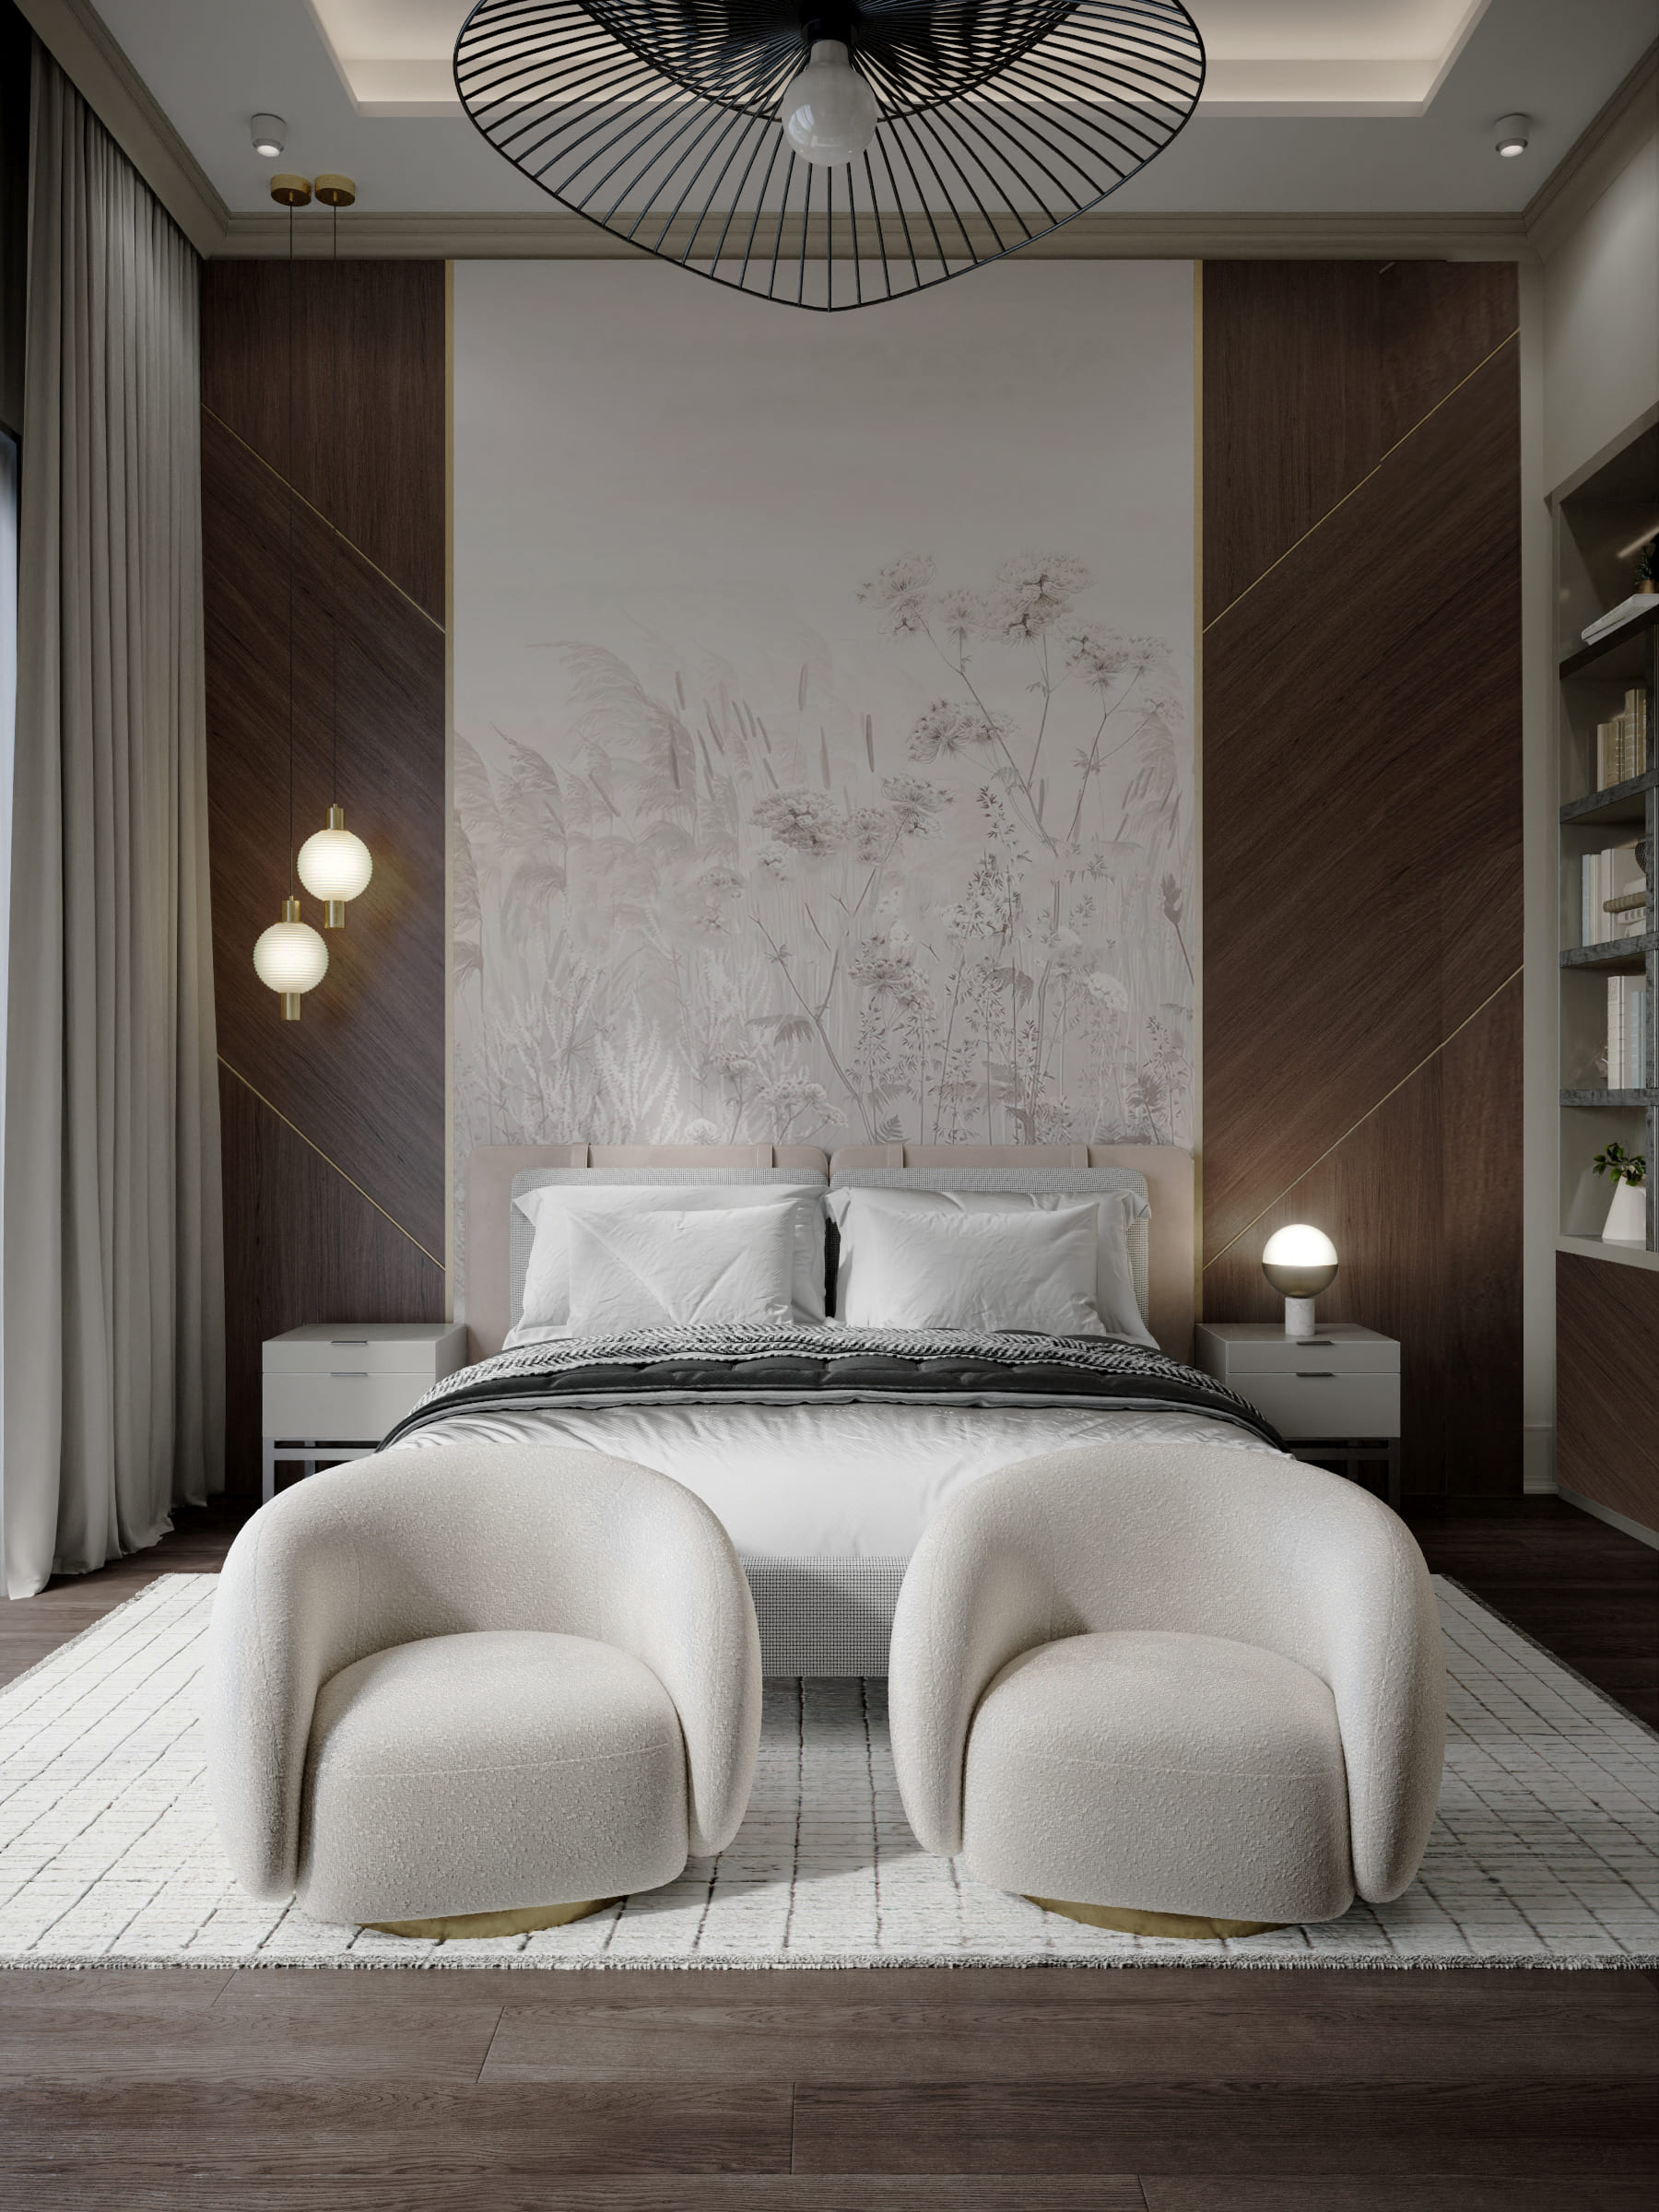 Interior design oth villa jumeirah pearl by kg design guest bedroom photo 3